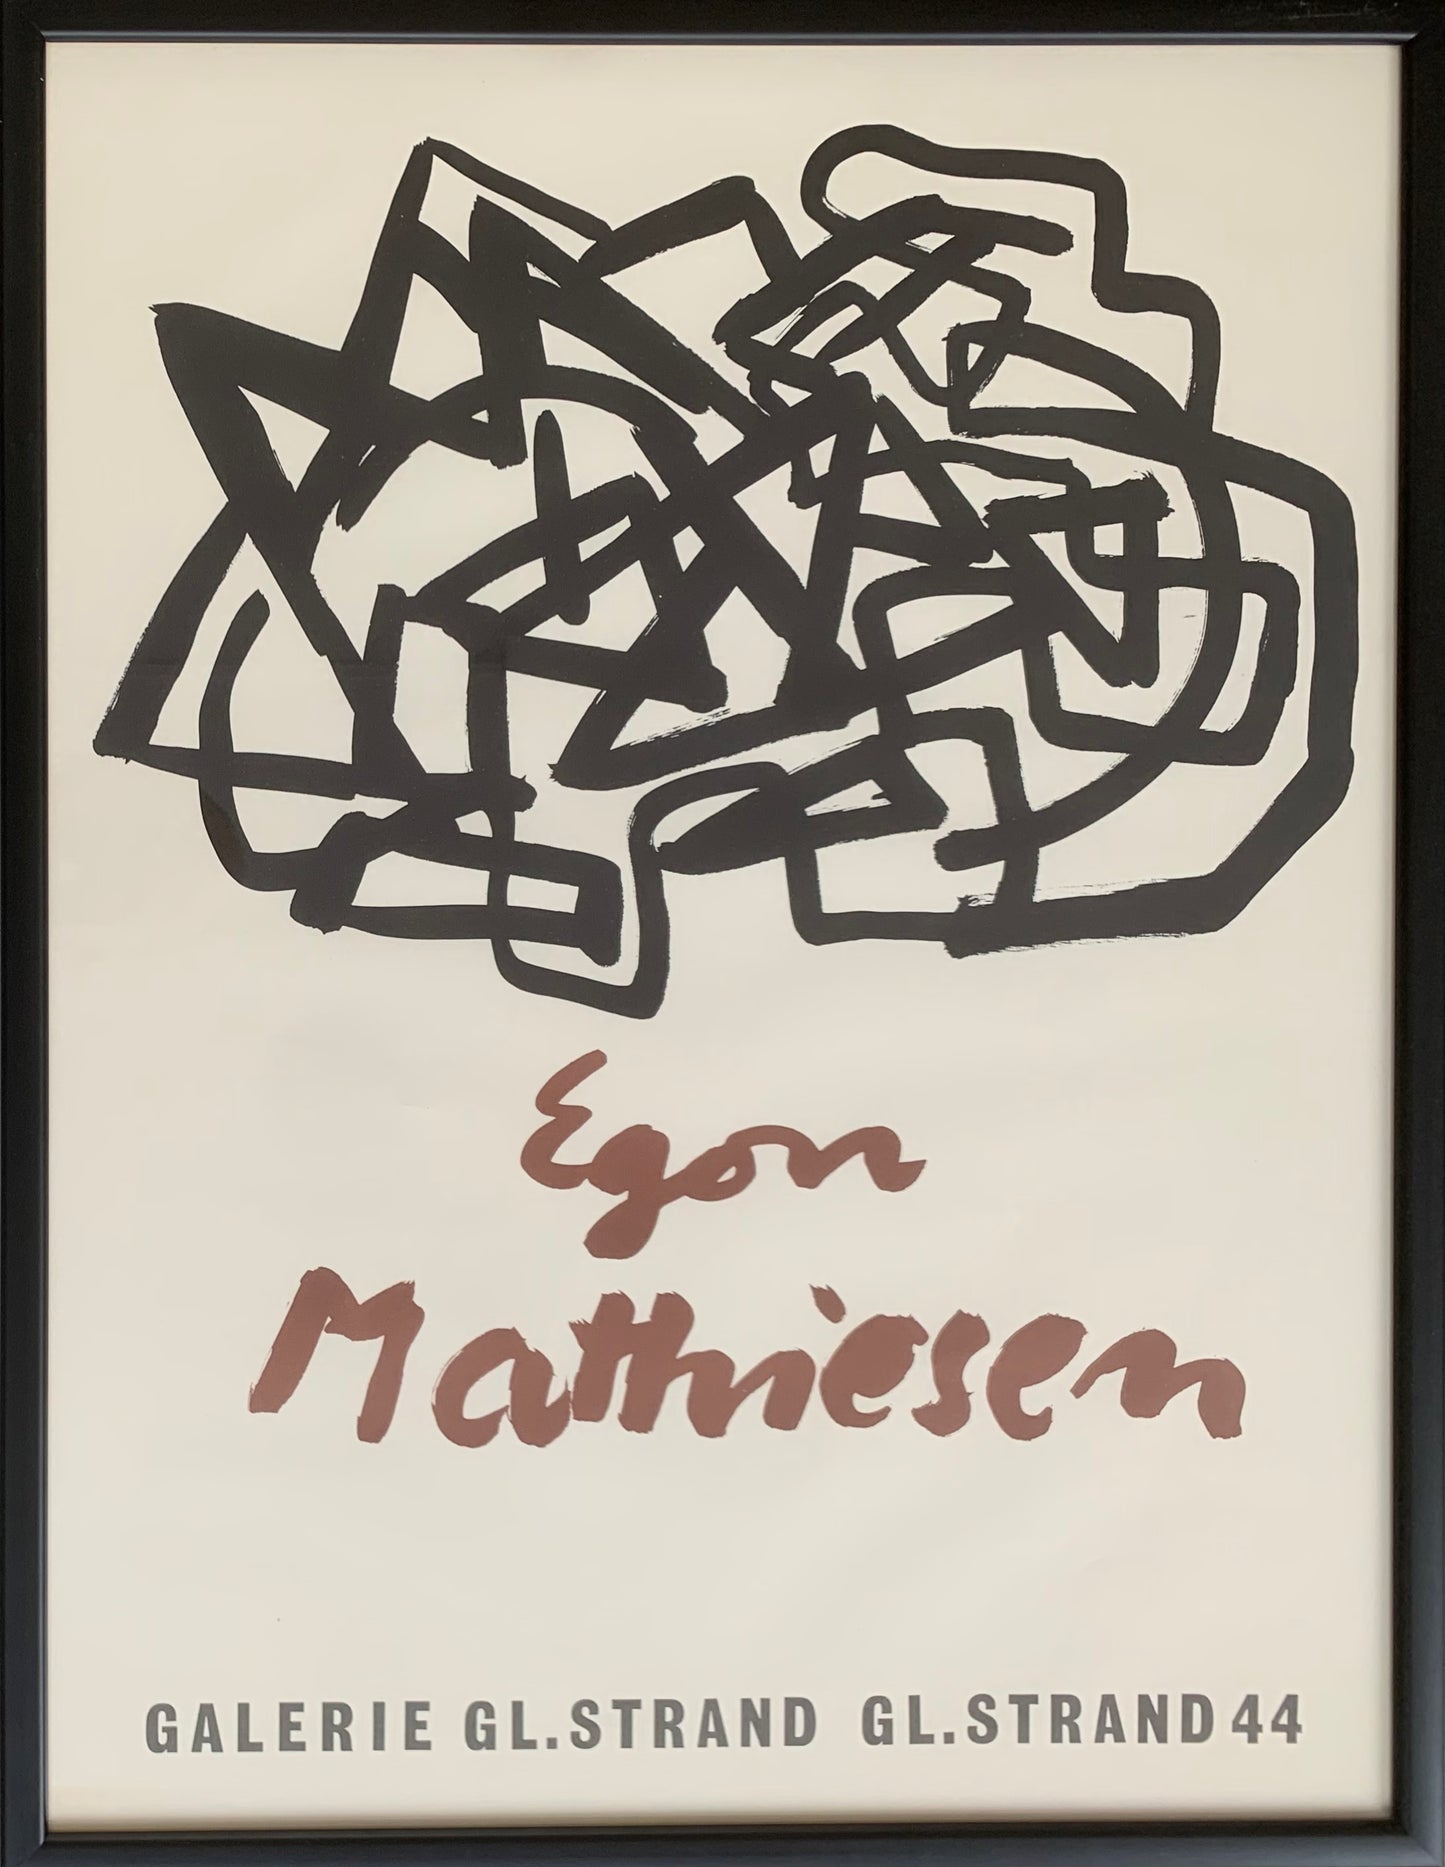 Egon Mathiesen. Composition, 1961